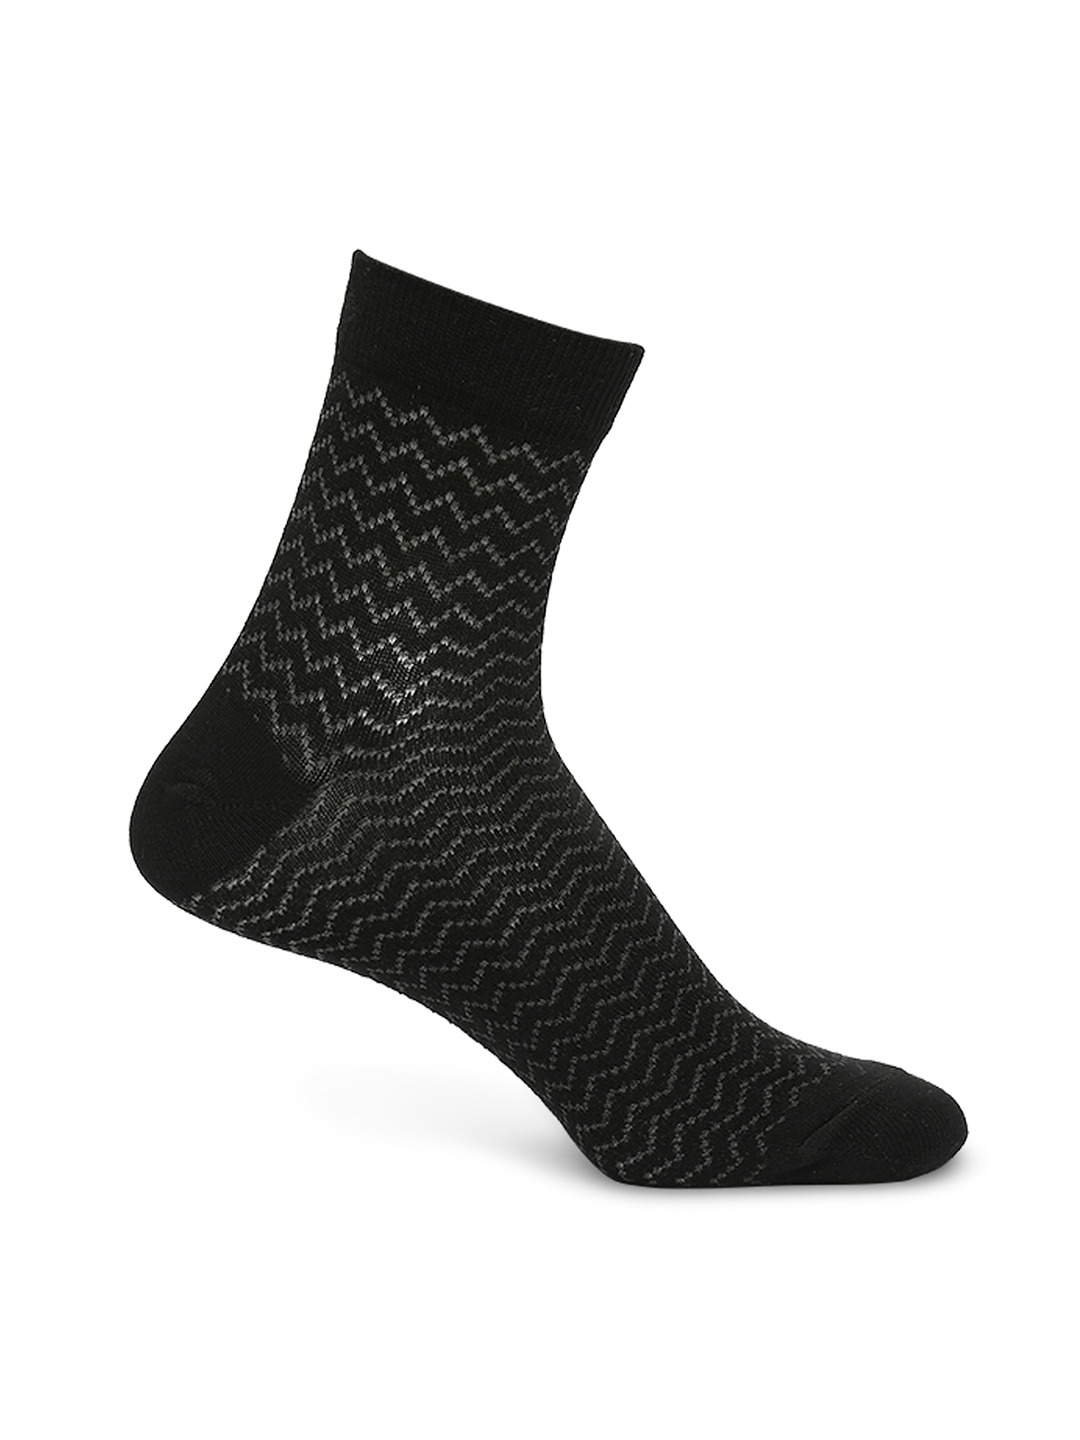 spykar | Underjeans by Spykar Premium Black & Grey Melange Ankle Length Socks - Pack Of 2 3